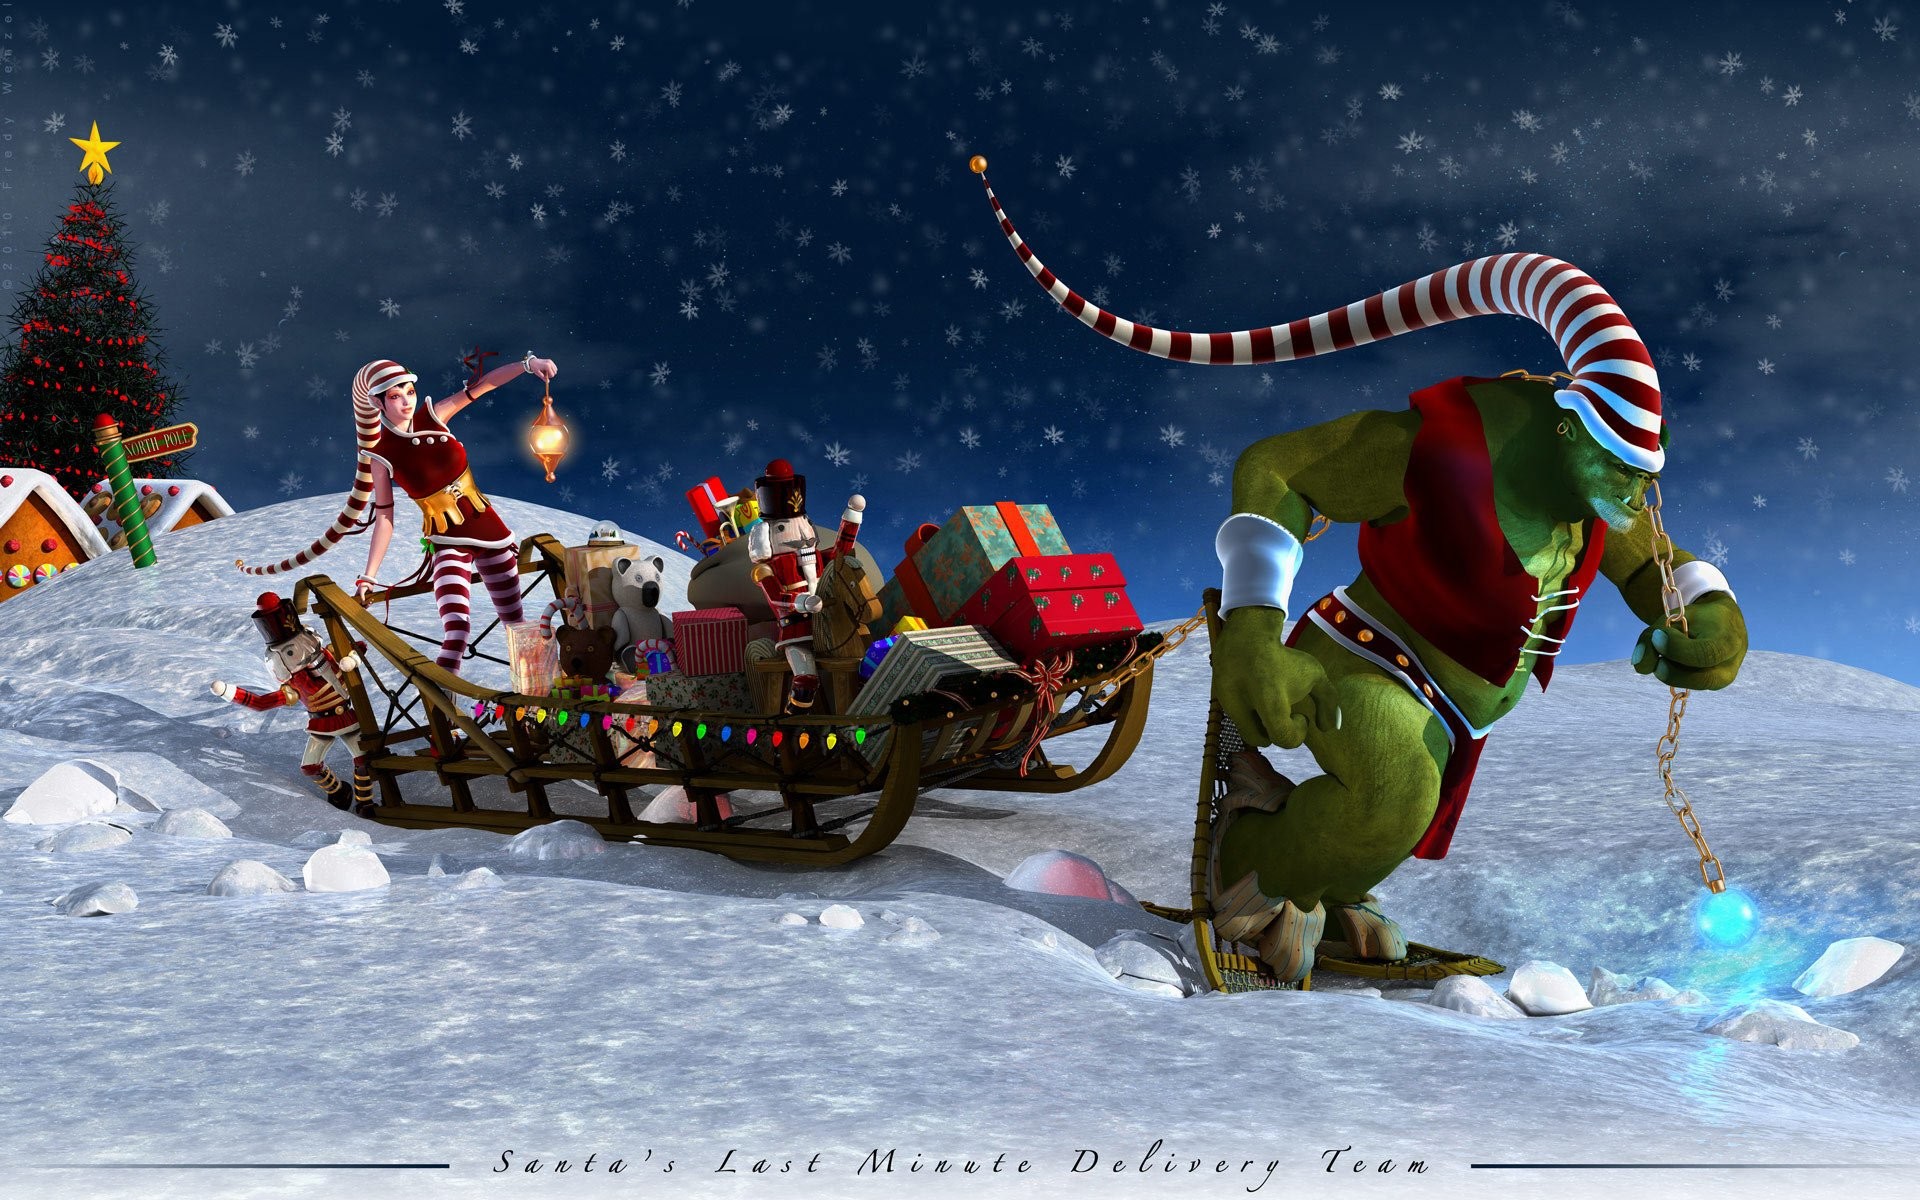 1920x1200 Best 20 Christmas nativity ideas on Pinterest Nativity